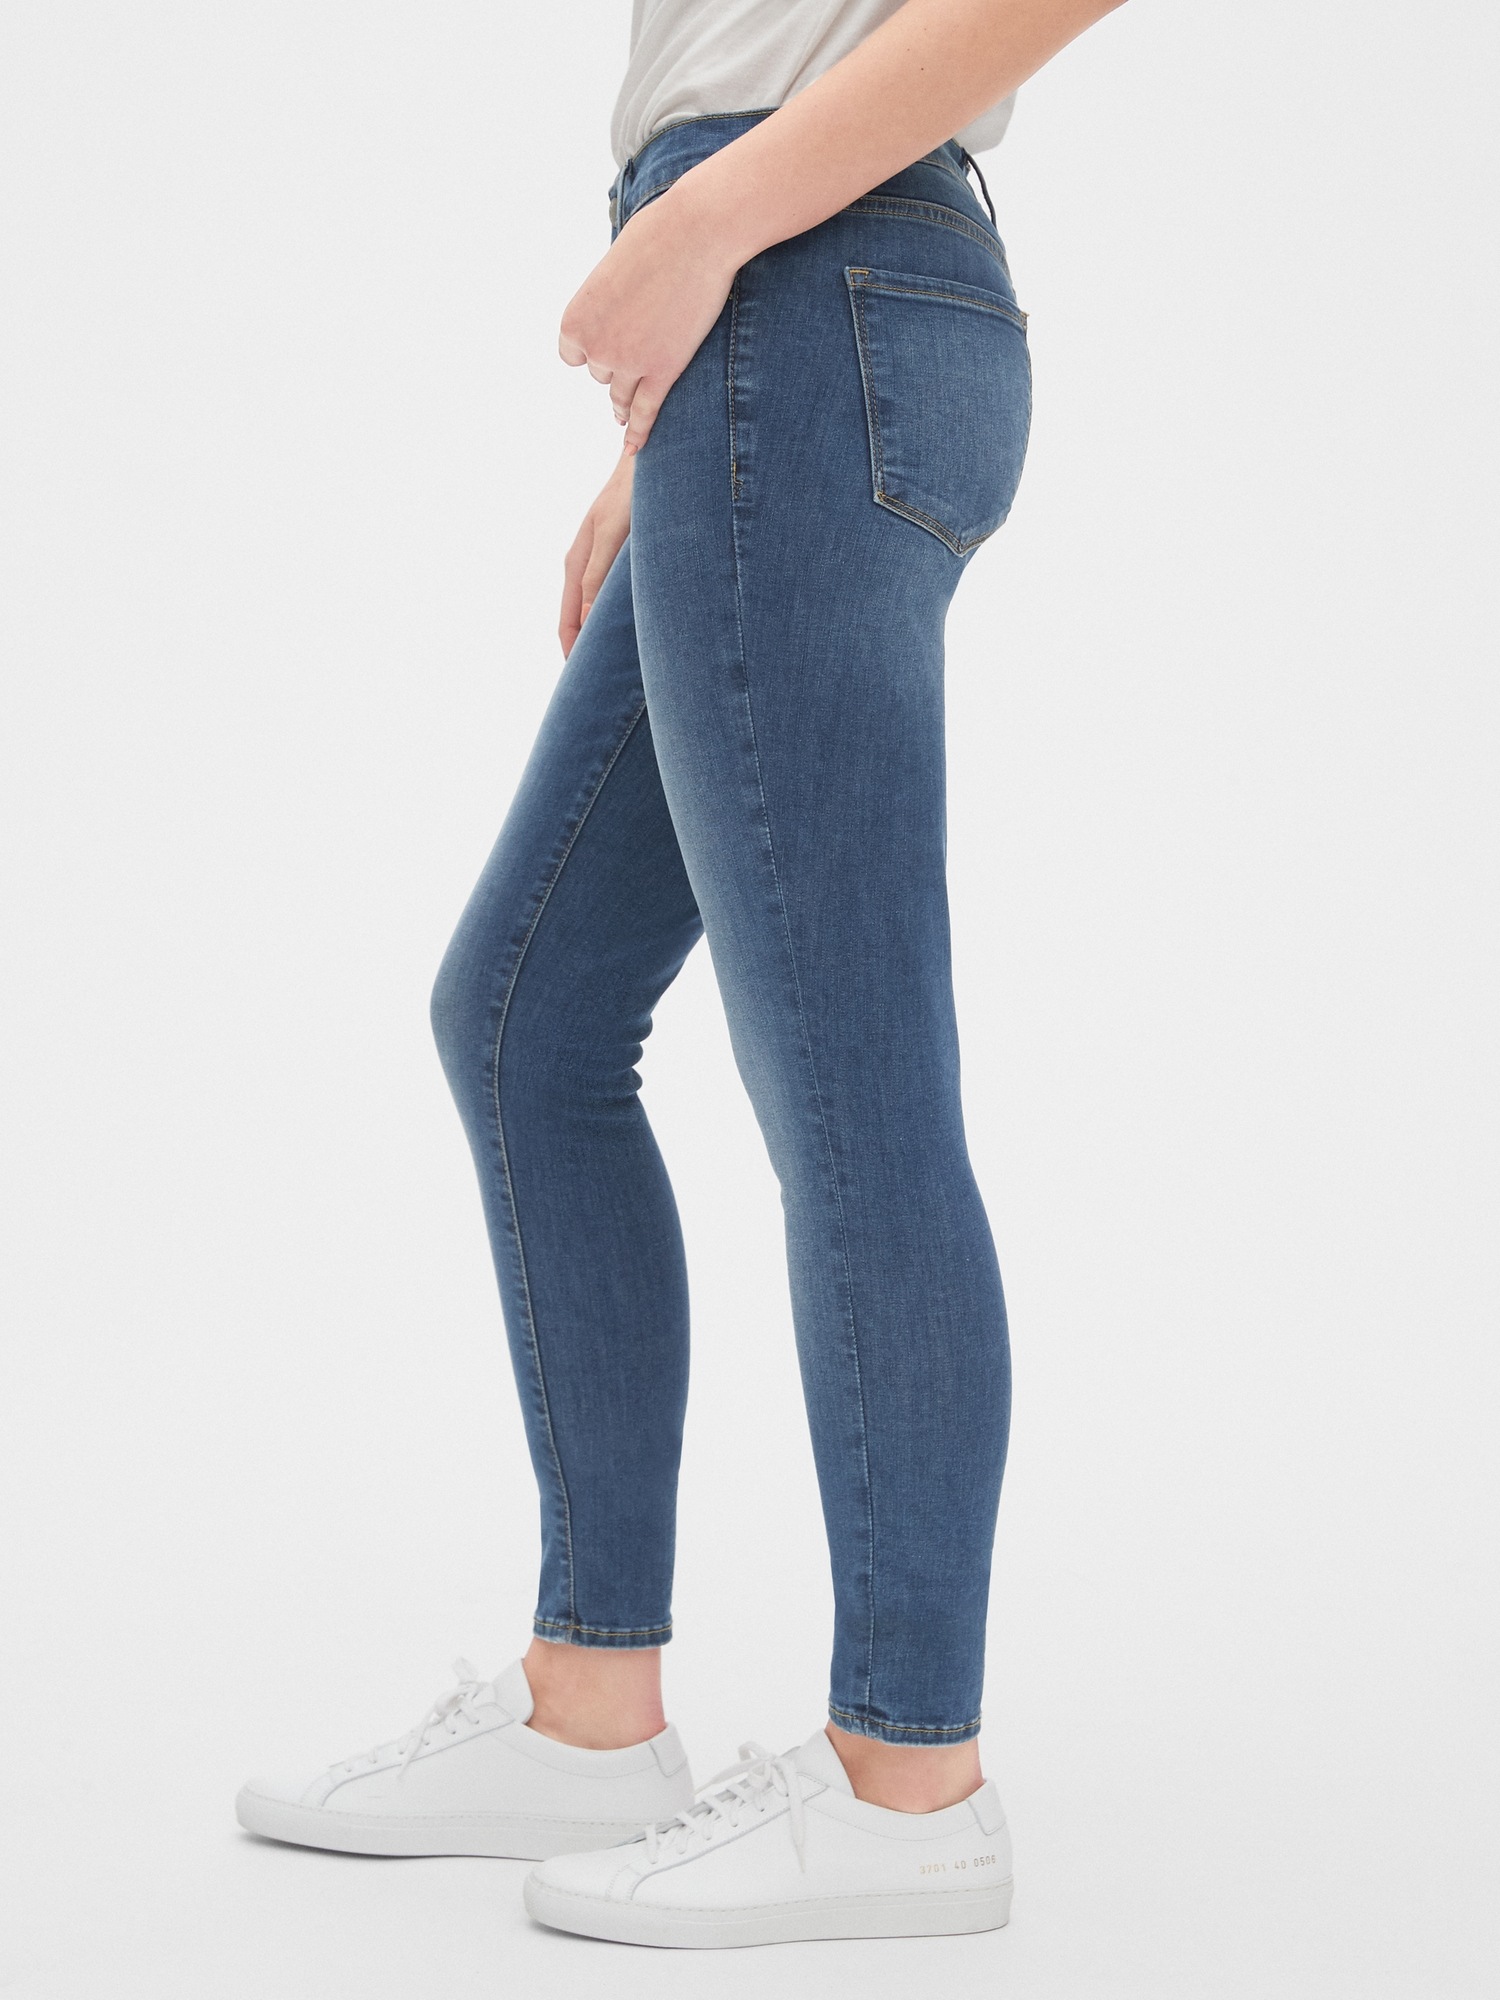 gap mid rise true skinny jeans in sculpt